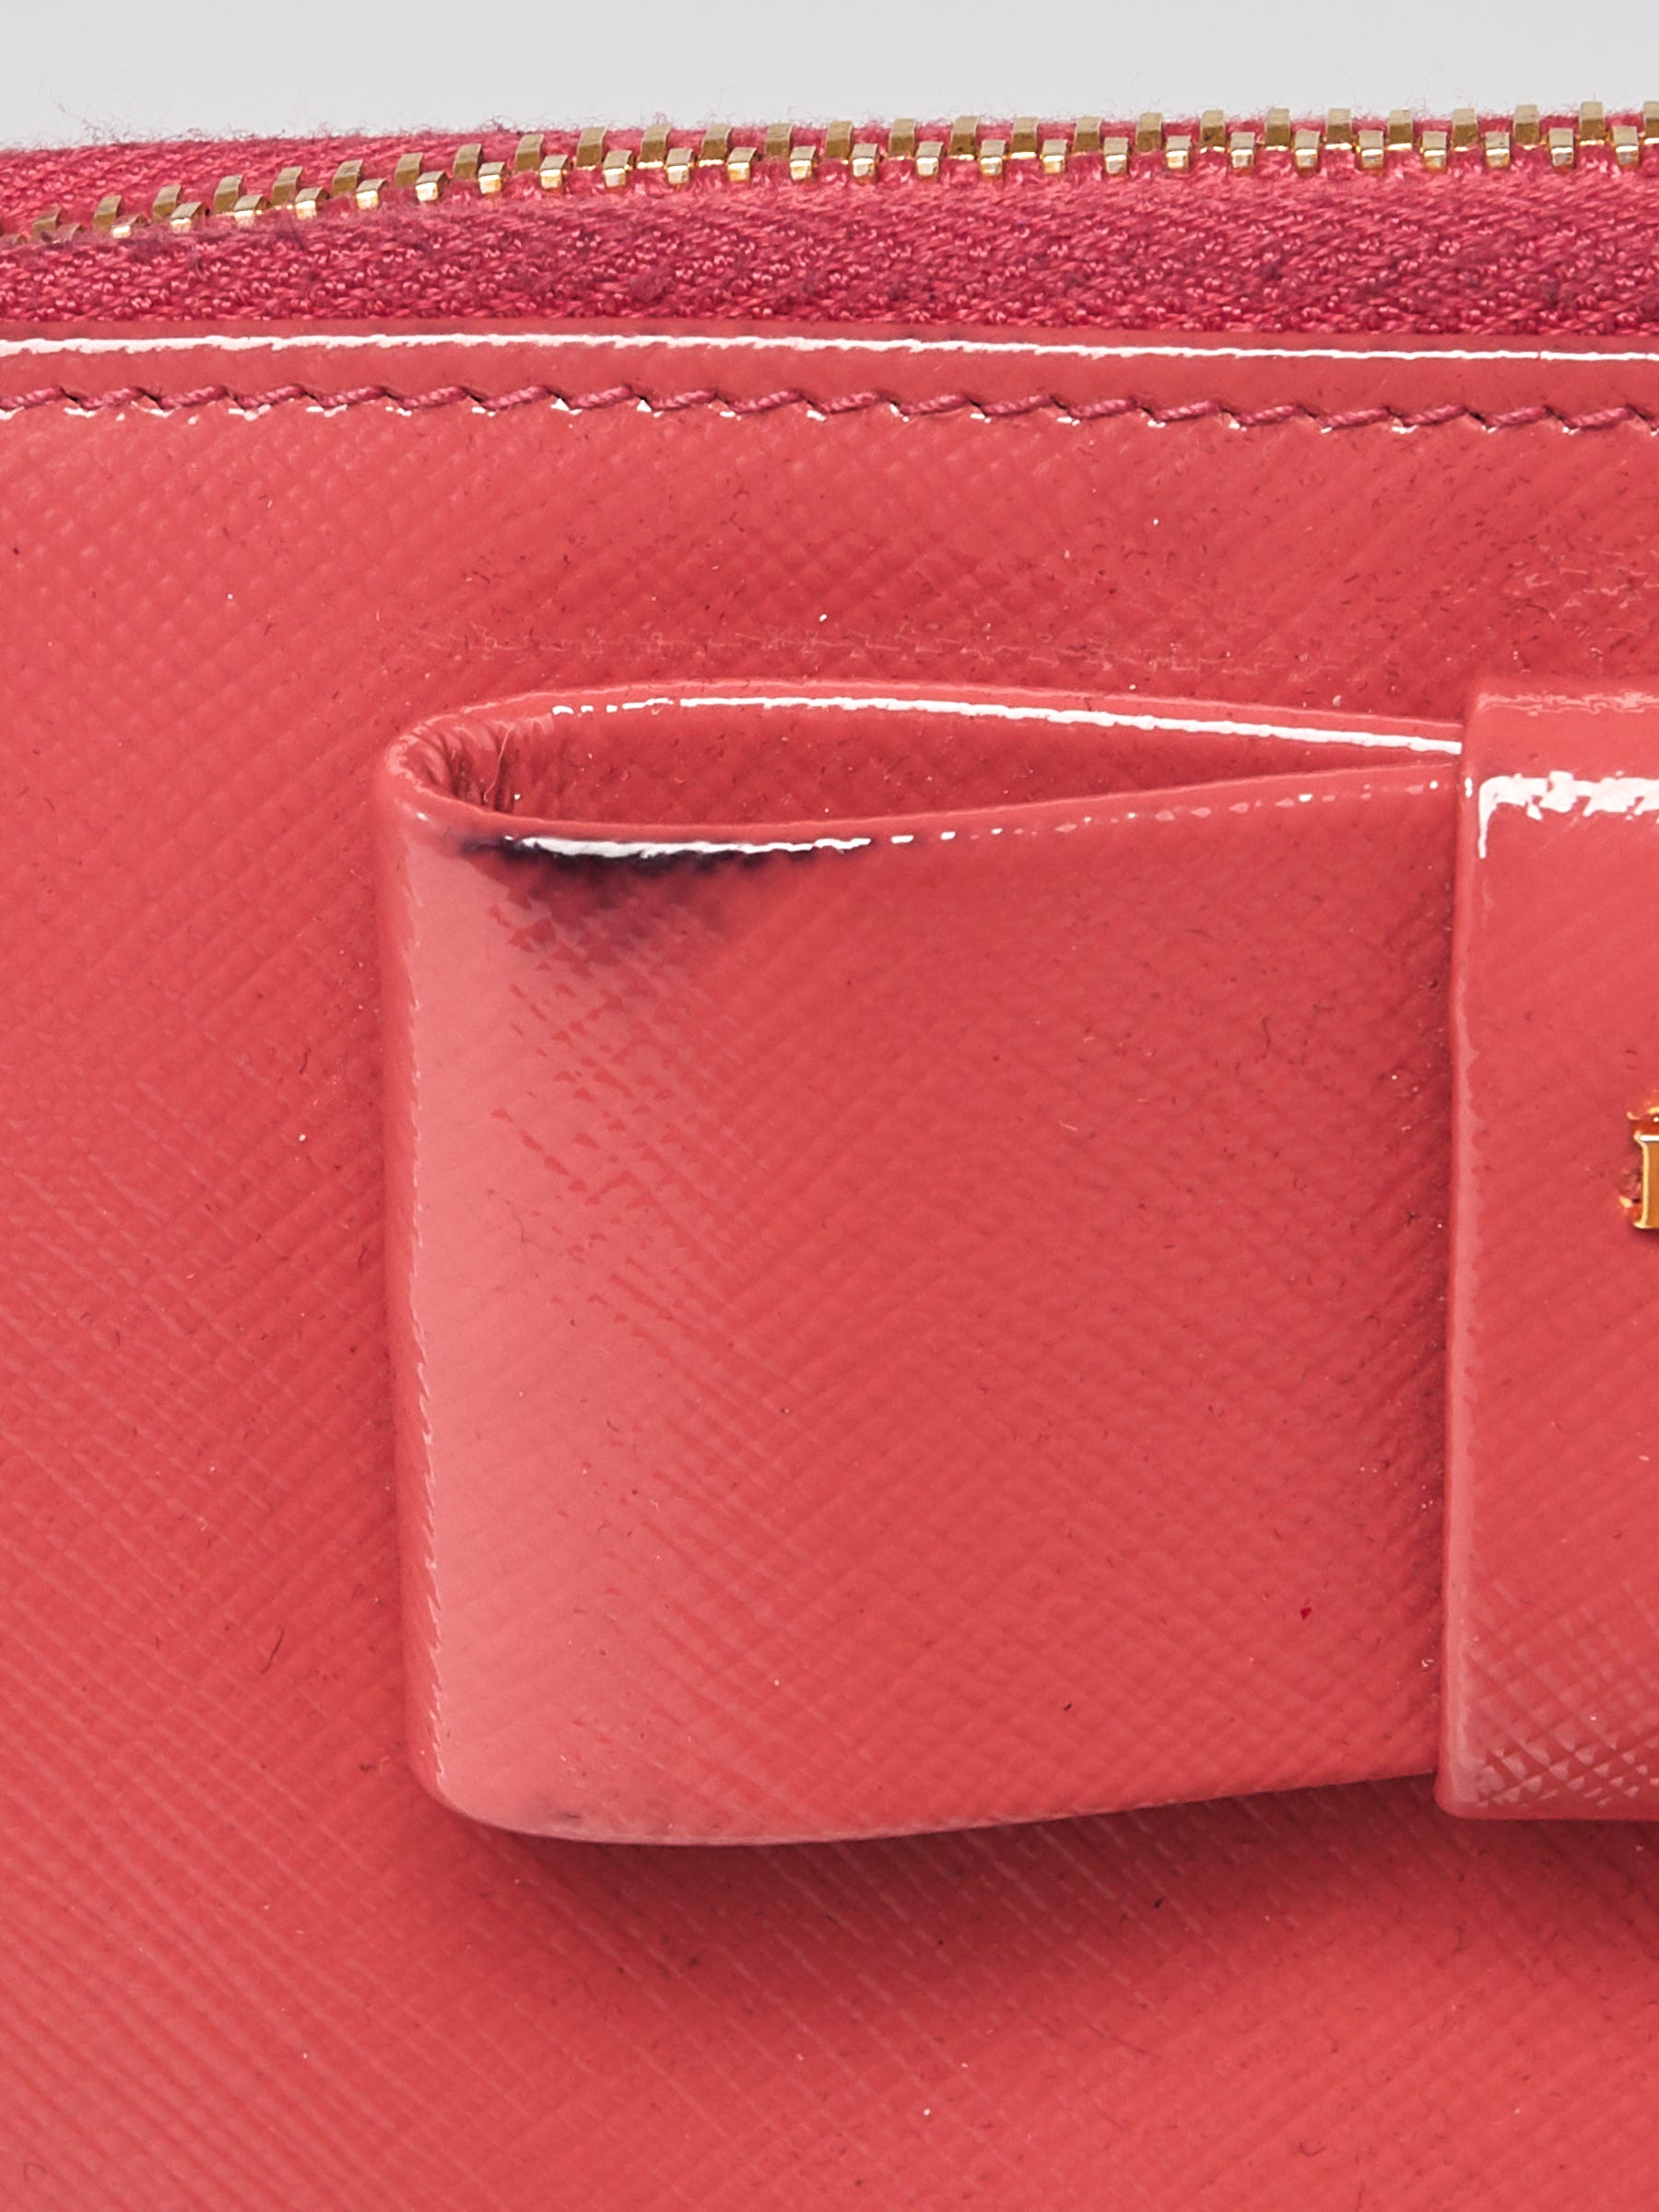 Prada Peonia Saffiano Vernice Leather Bow Zip Wallet